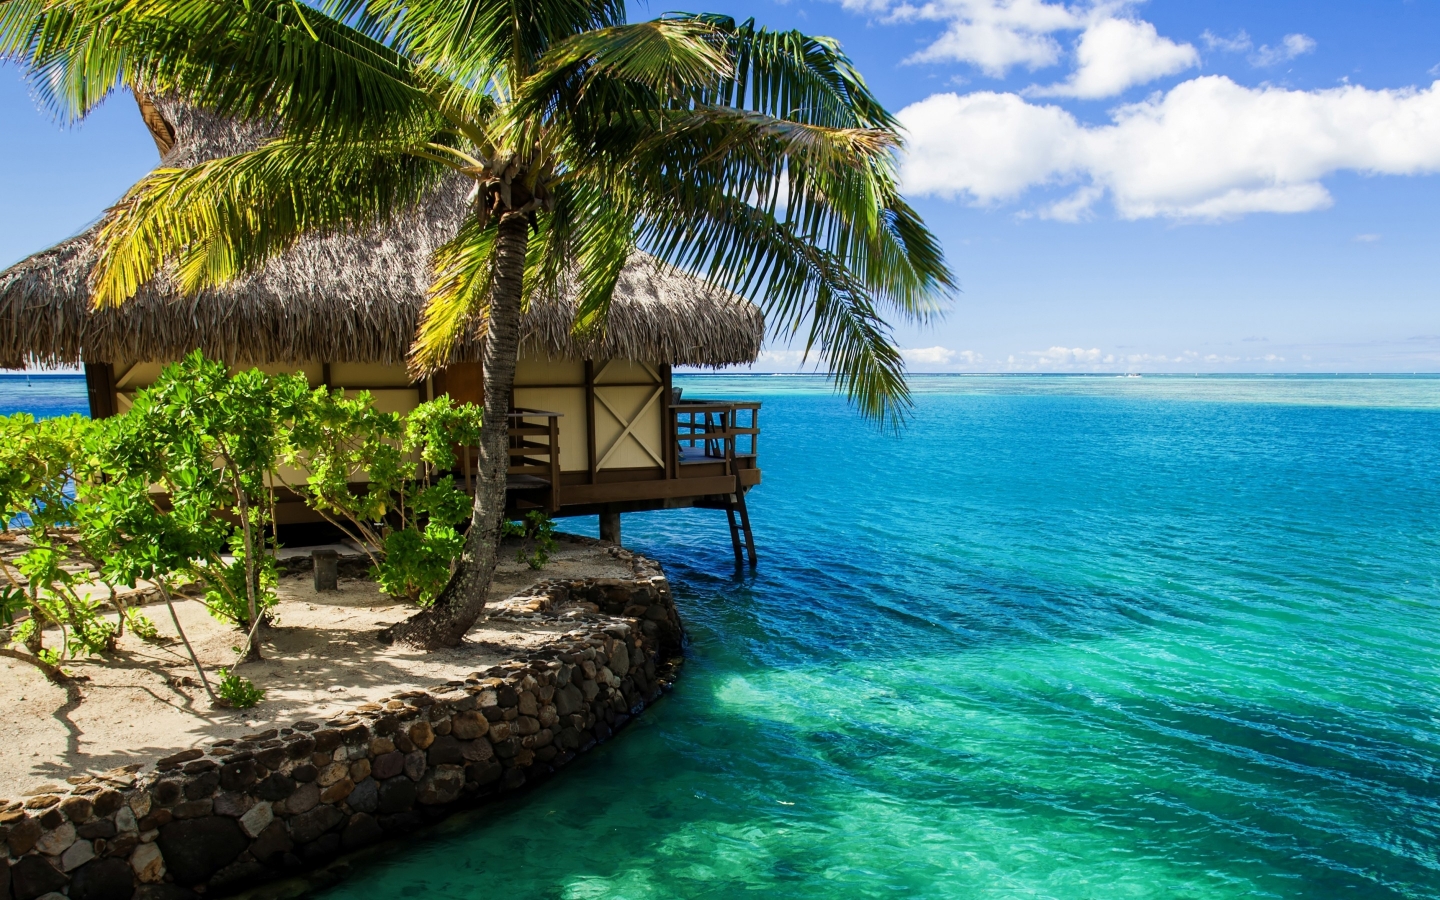 Beach House Maldives for 1440 x 900 widescreen resolution